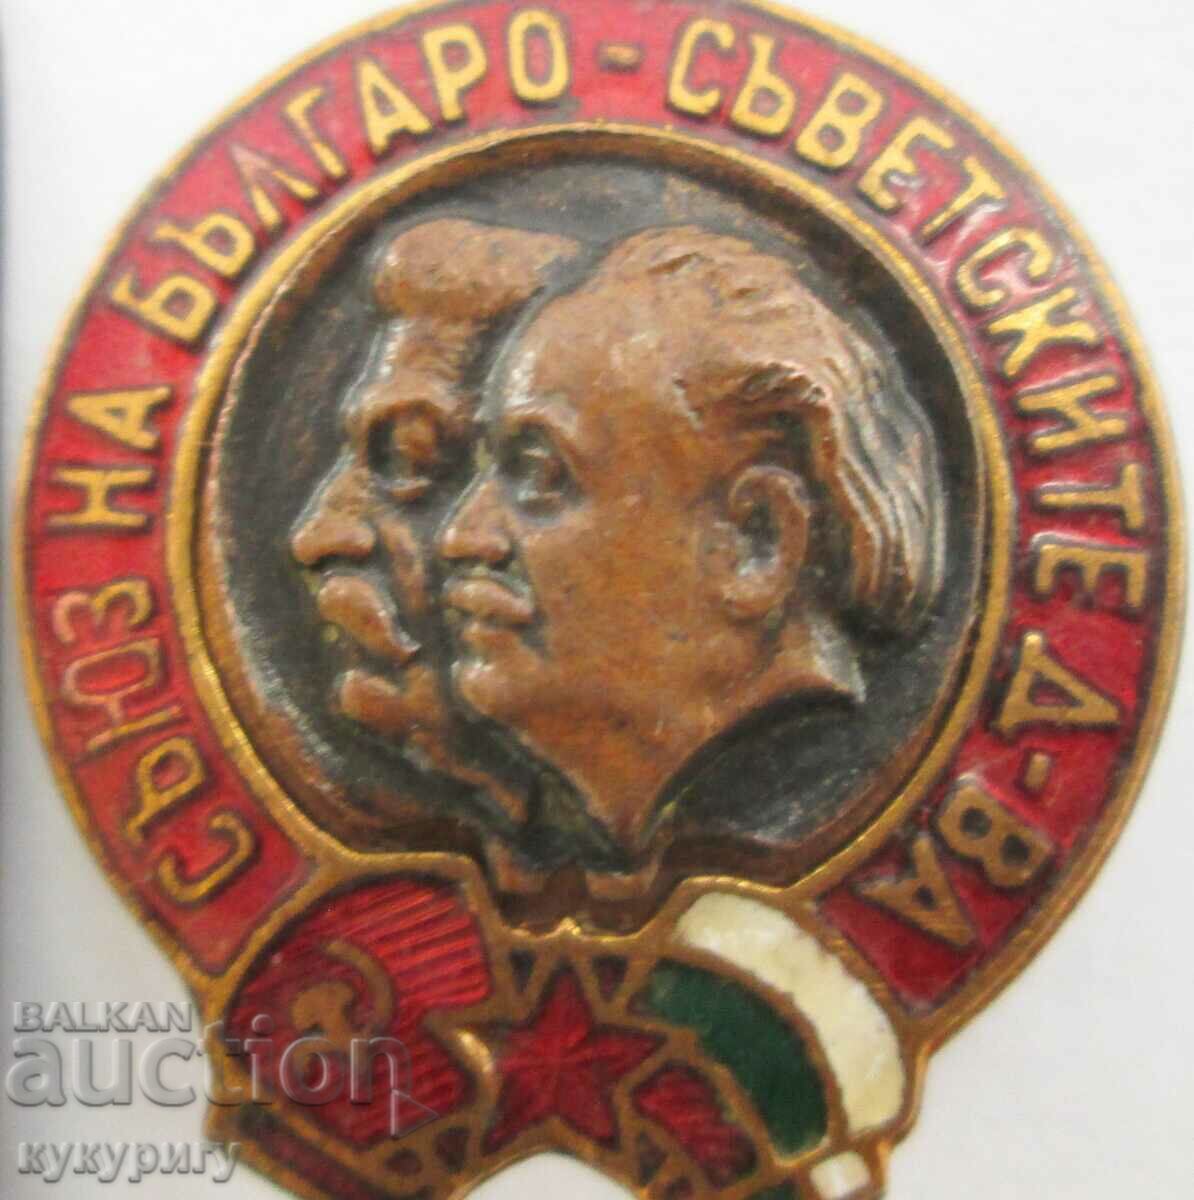 Star Sots sign badge BSD Union of Bulgarian-Soviet Dva